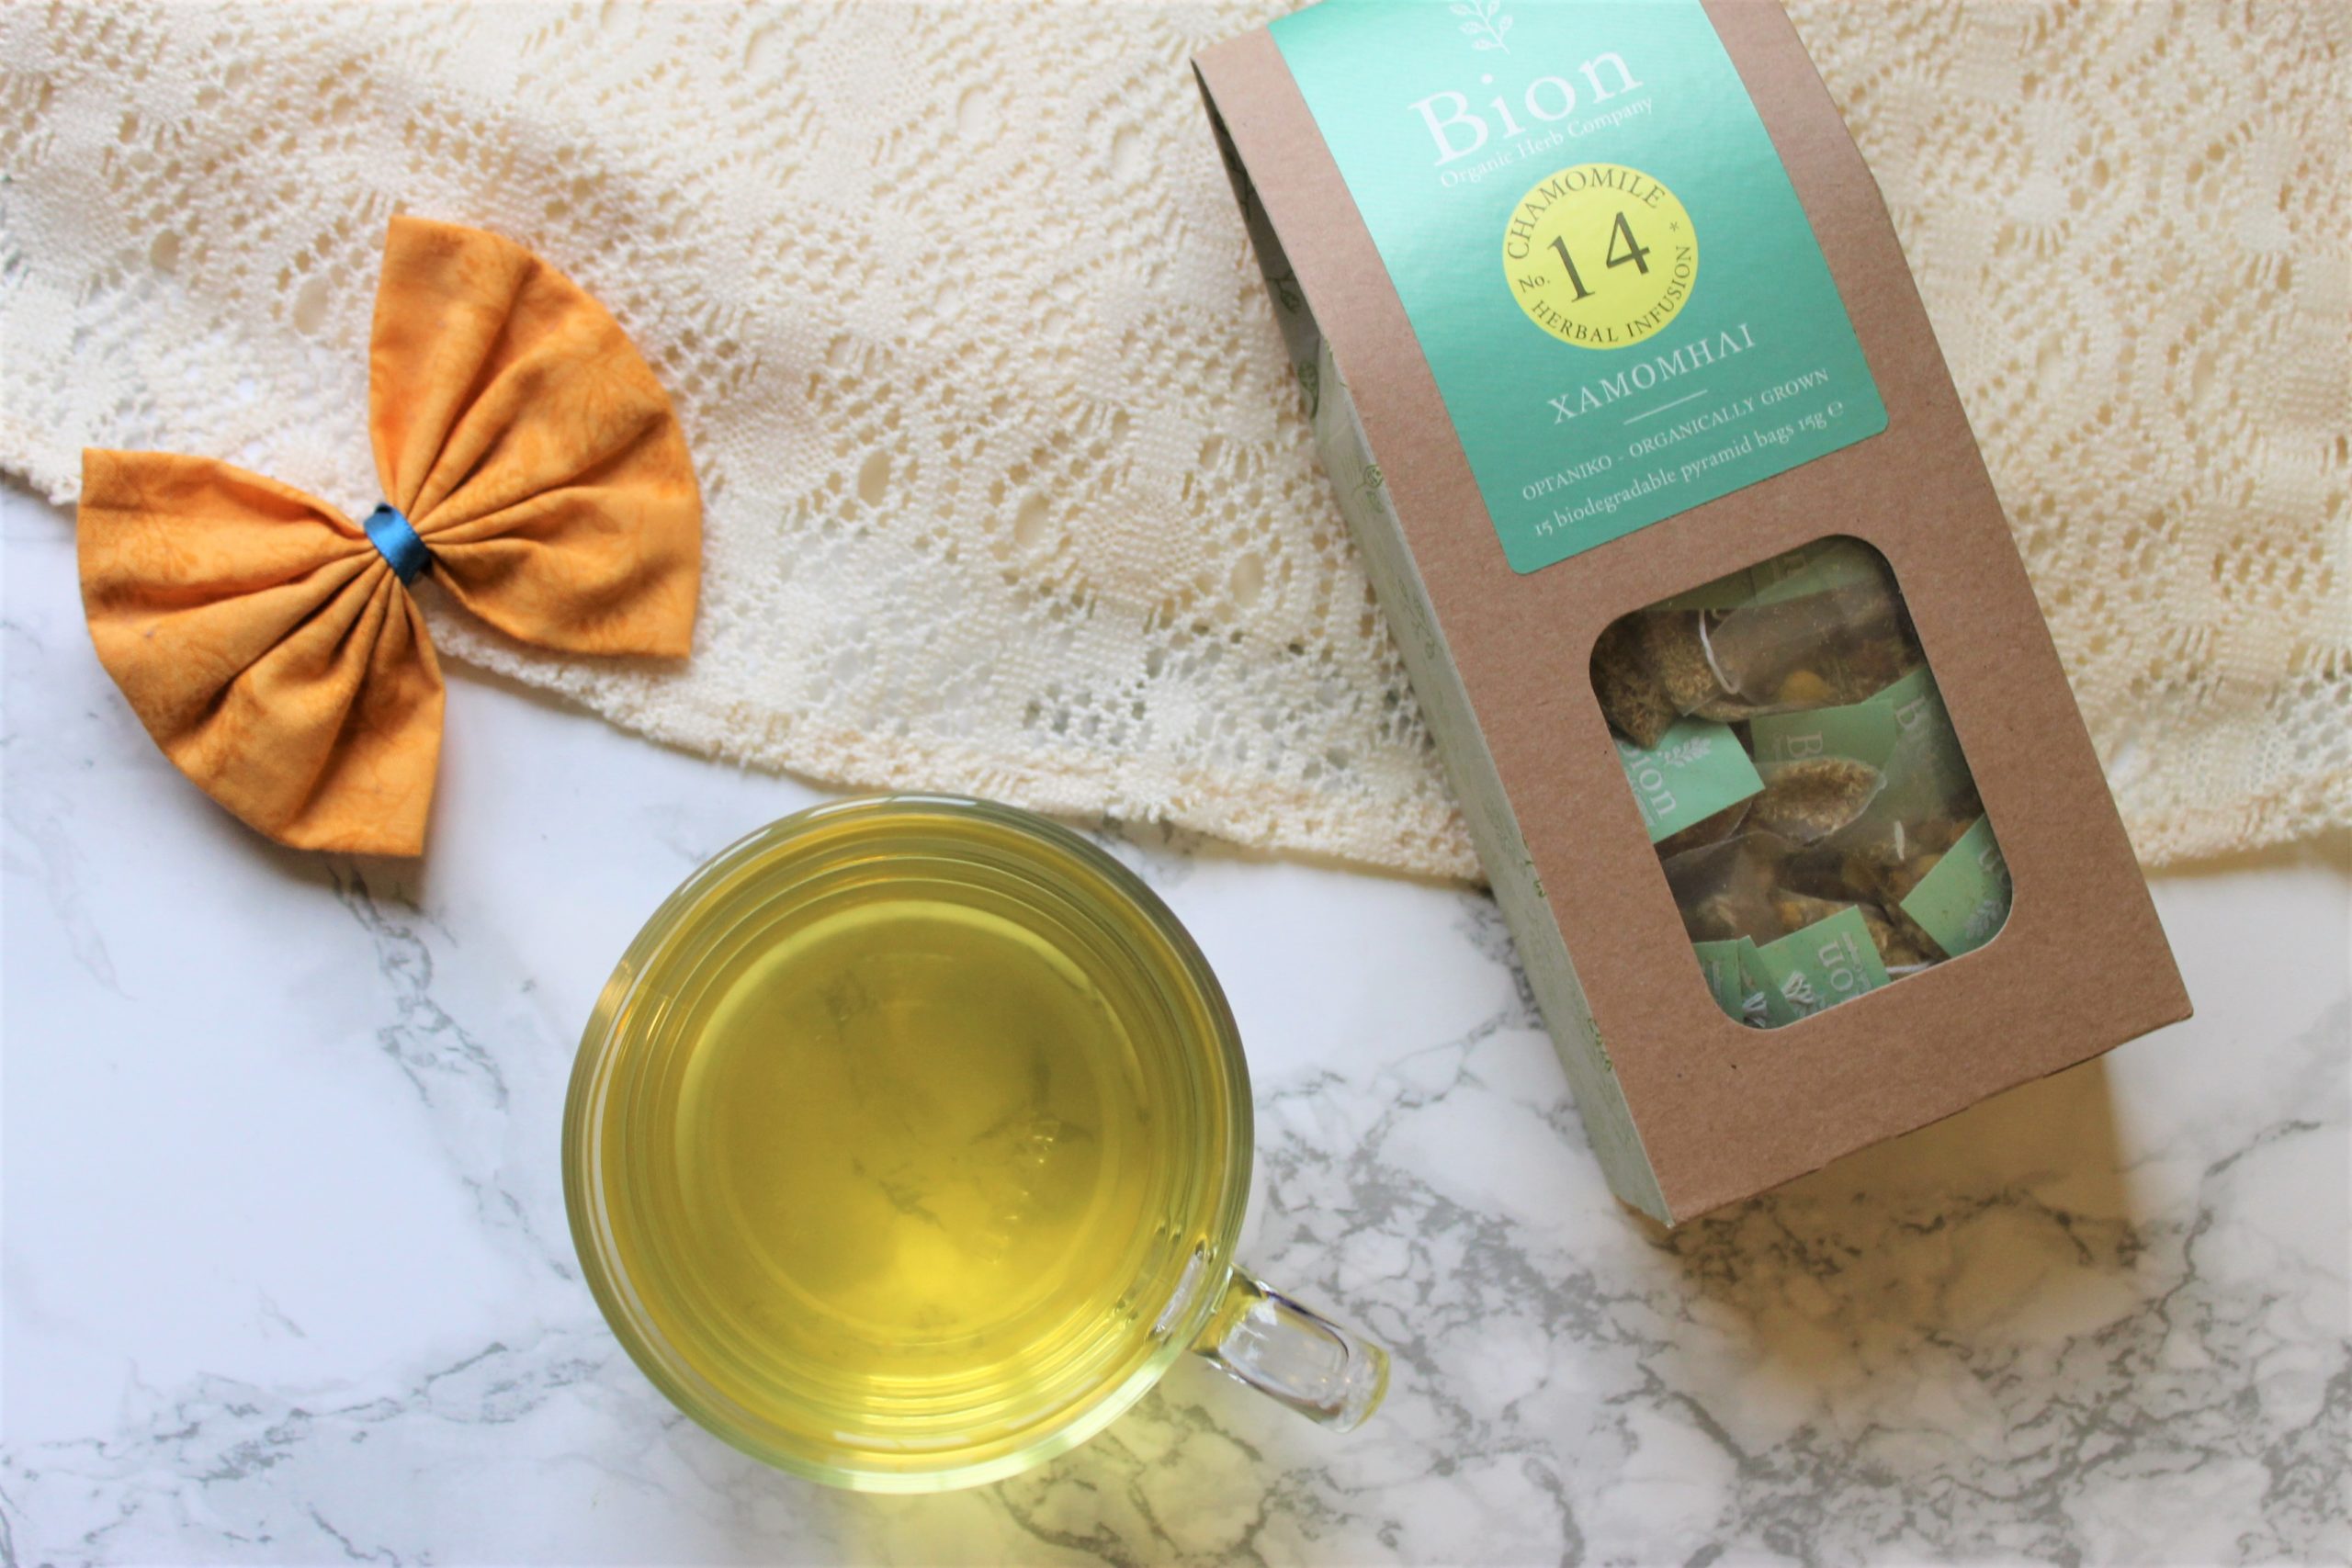 bion chamomile tea review